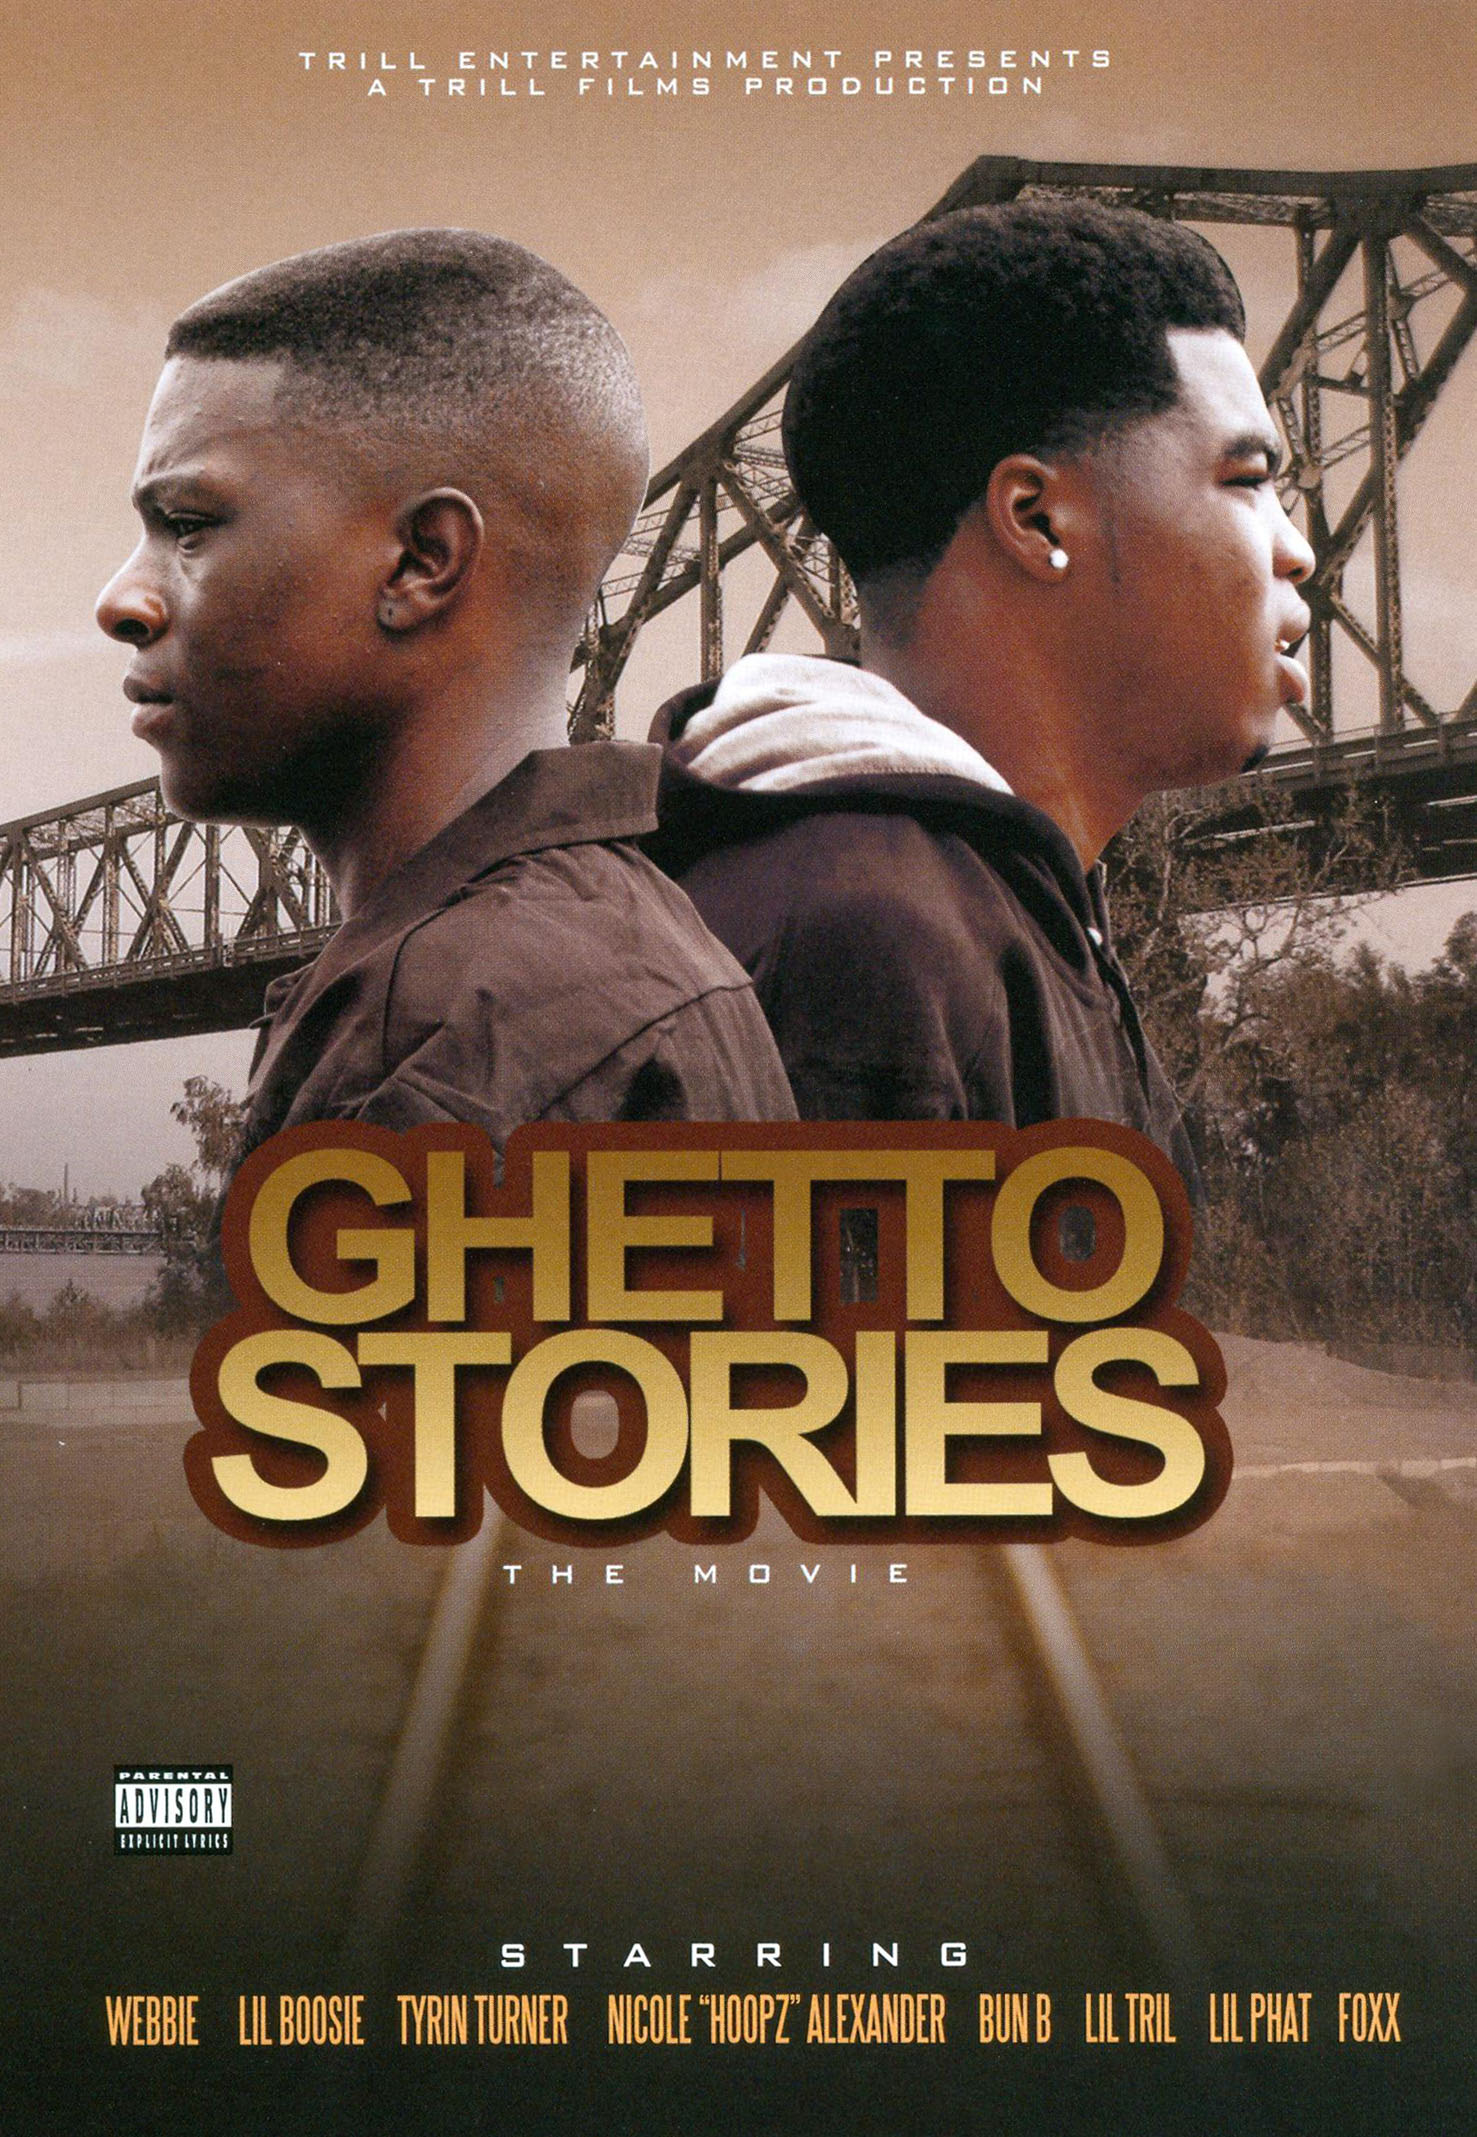 ghetto stories movies boosie lil dvd allmovie booksamillion covers tumblers selling